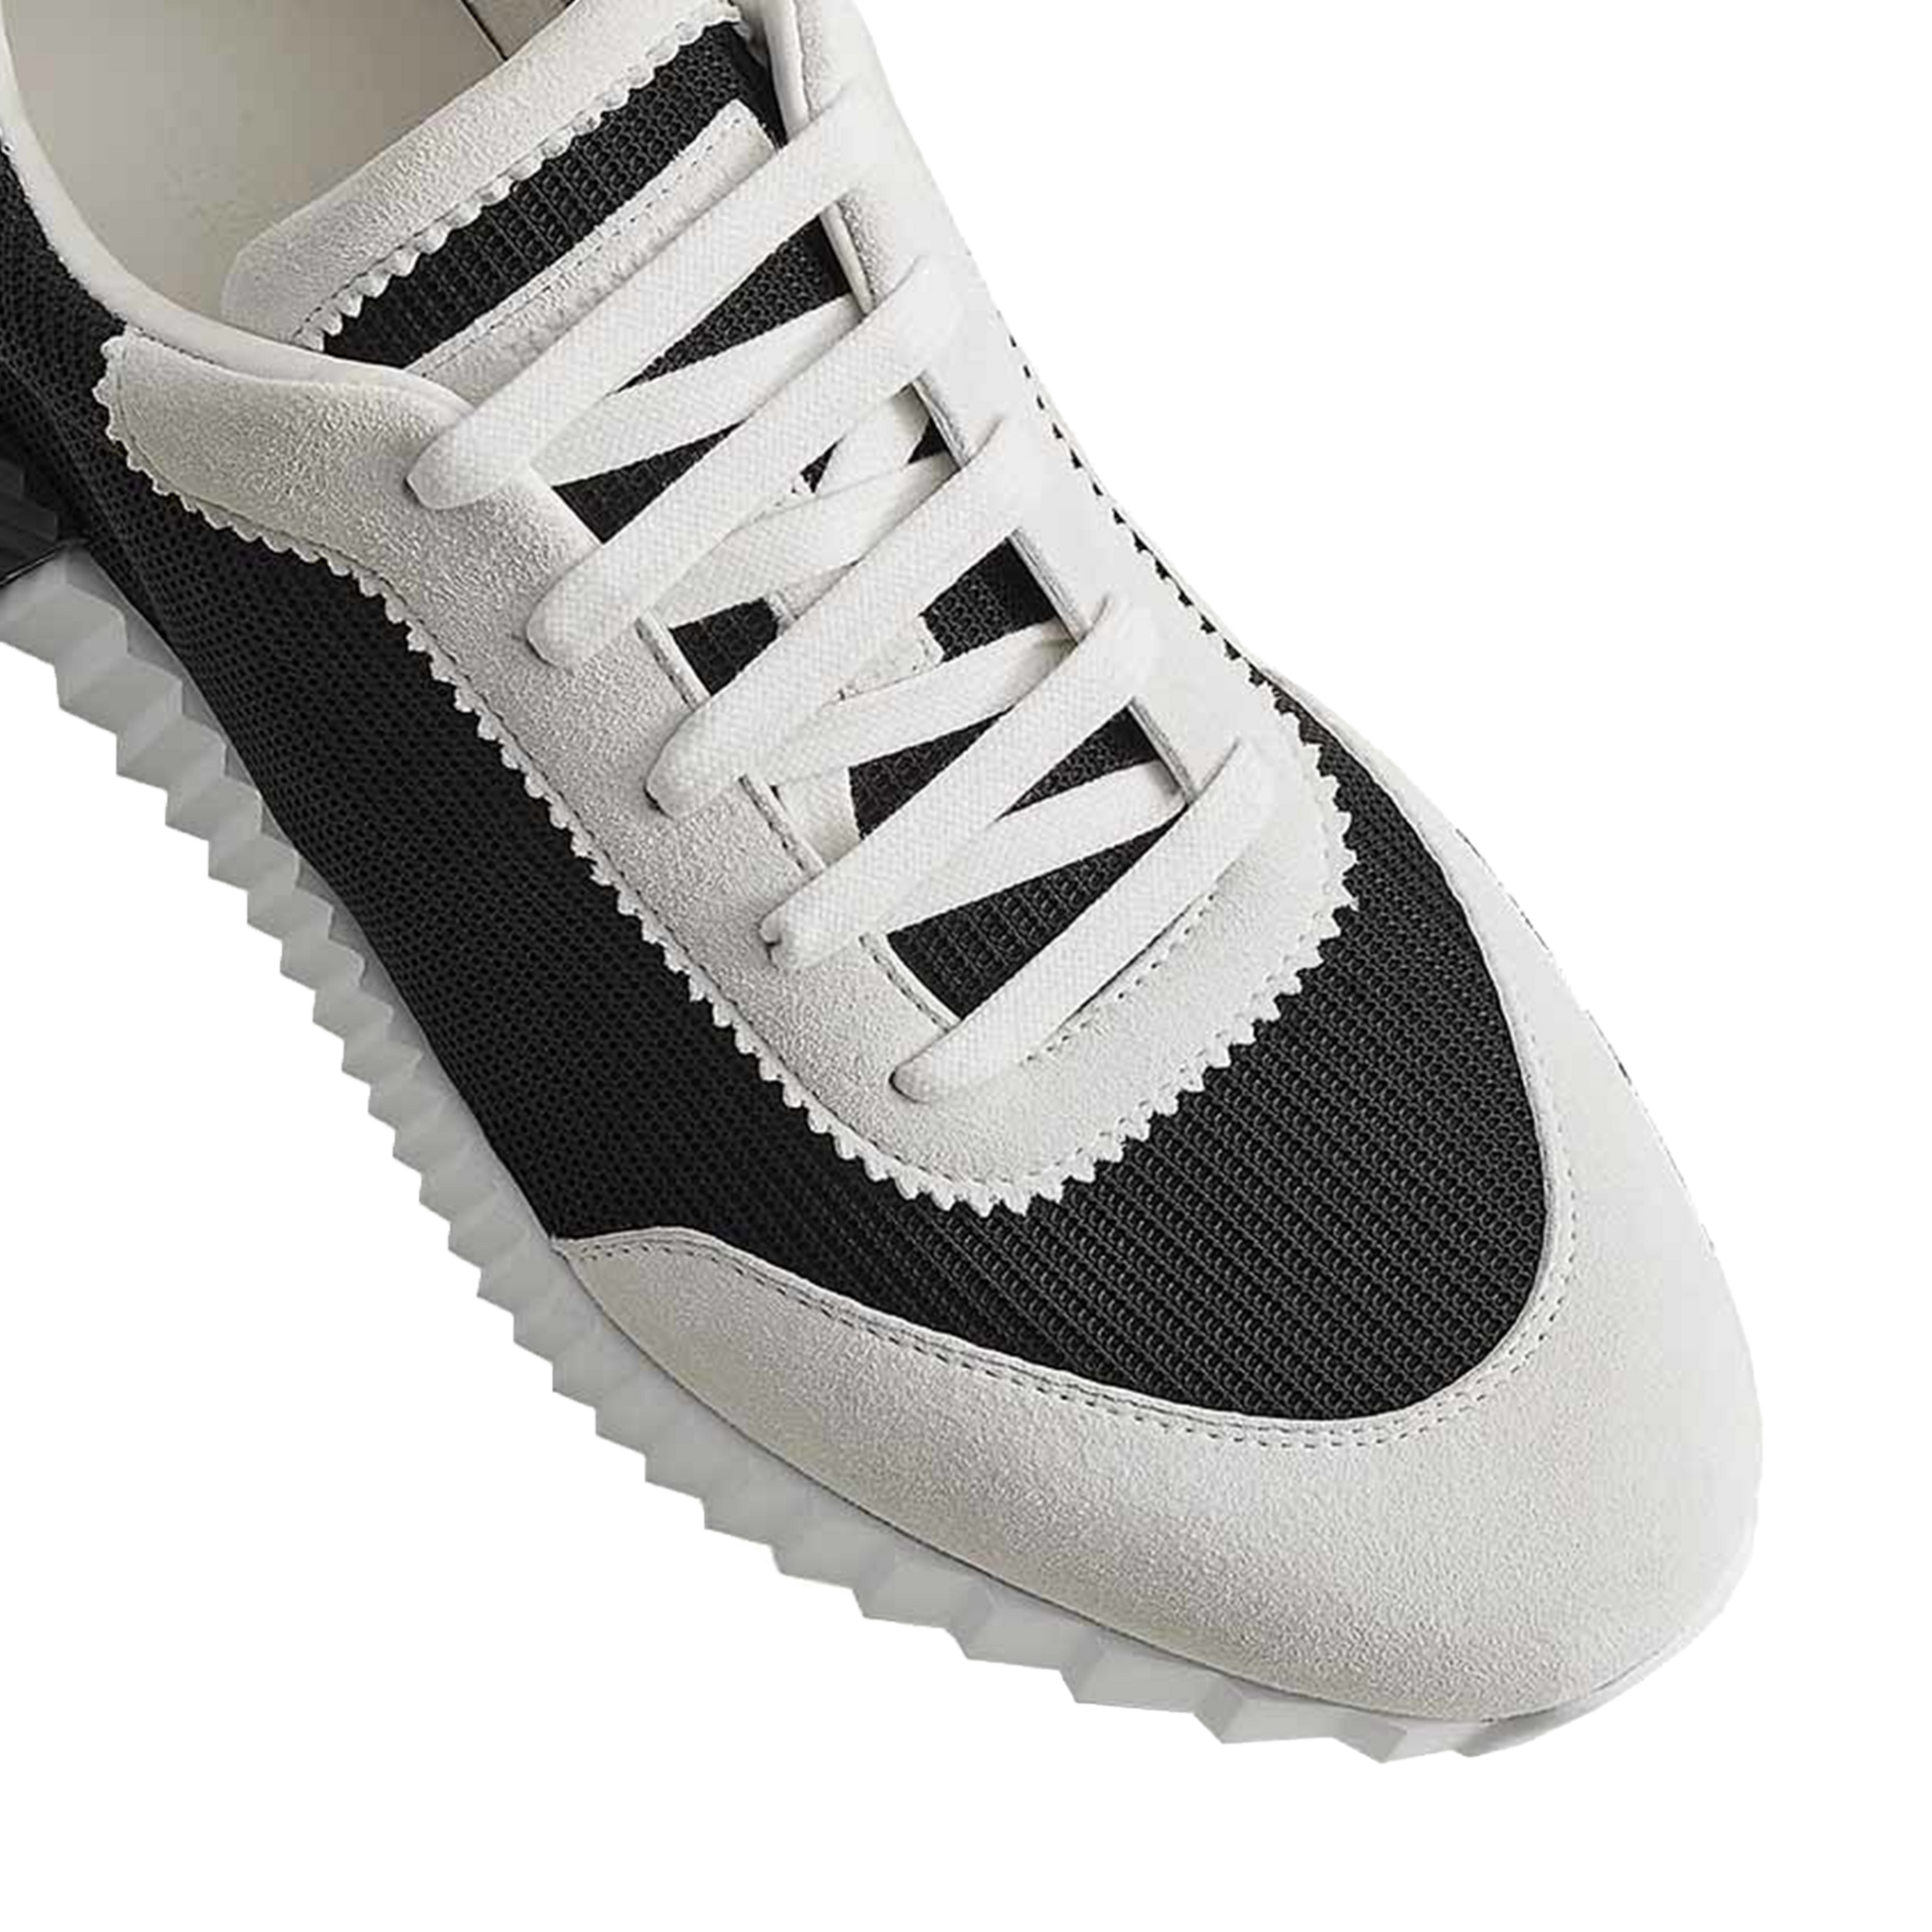 Hermes Paris Bouncing Sneaker Black & White - Fairchild Fashion 